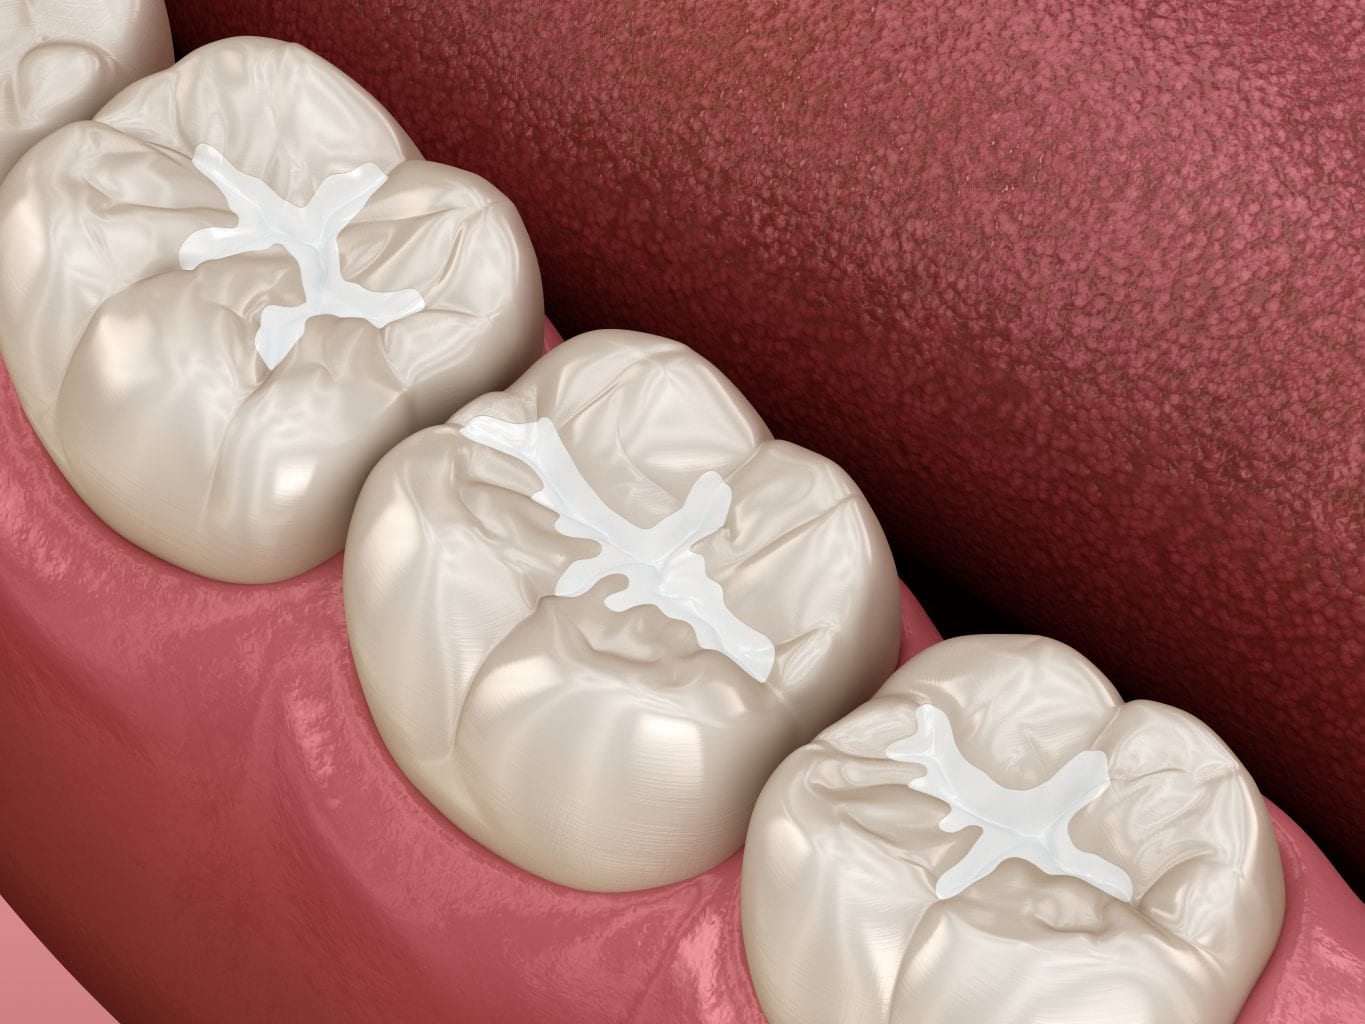 Dental sealants applied to molars at Perspective Dental